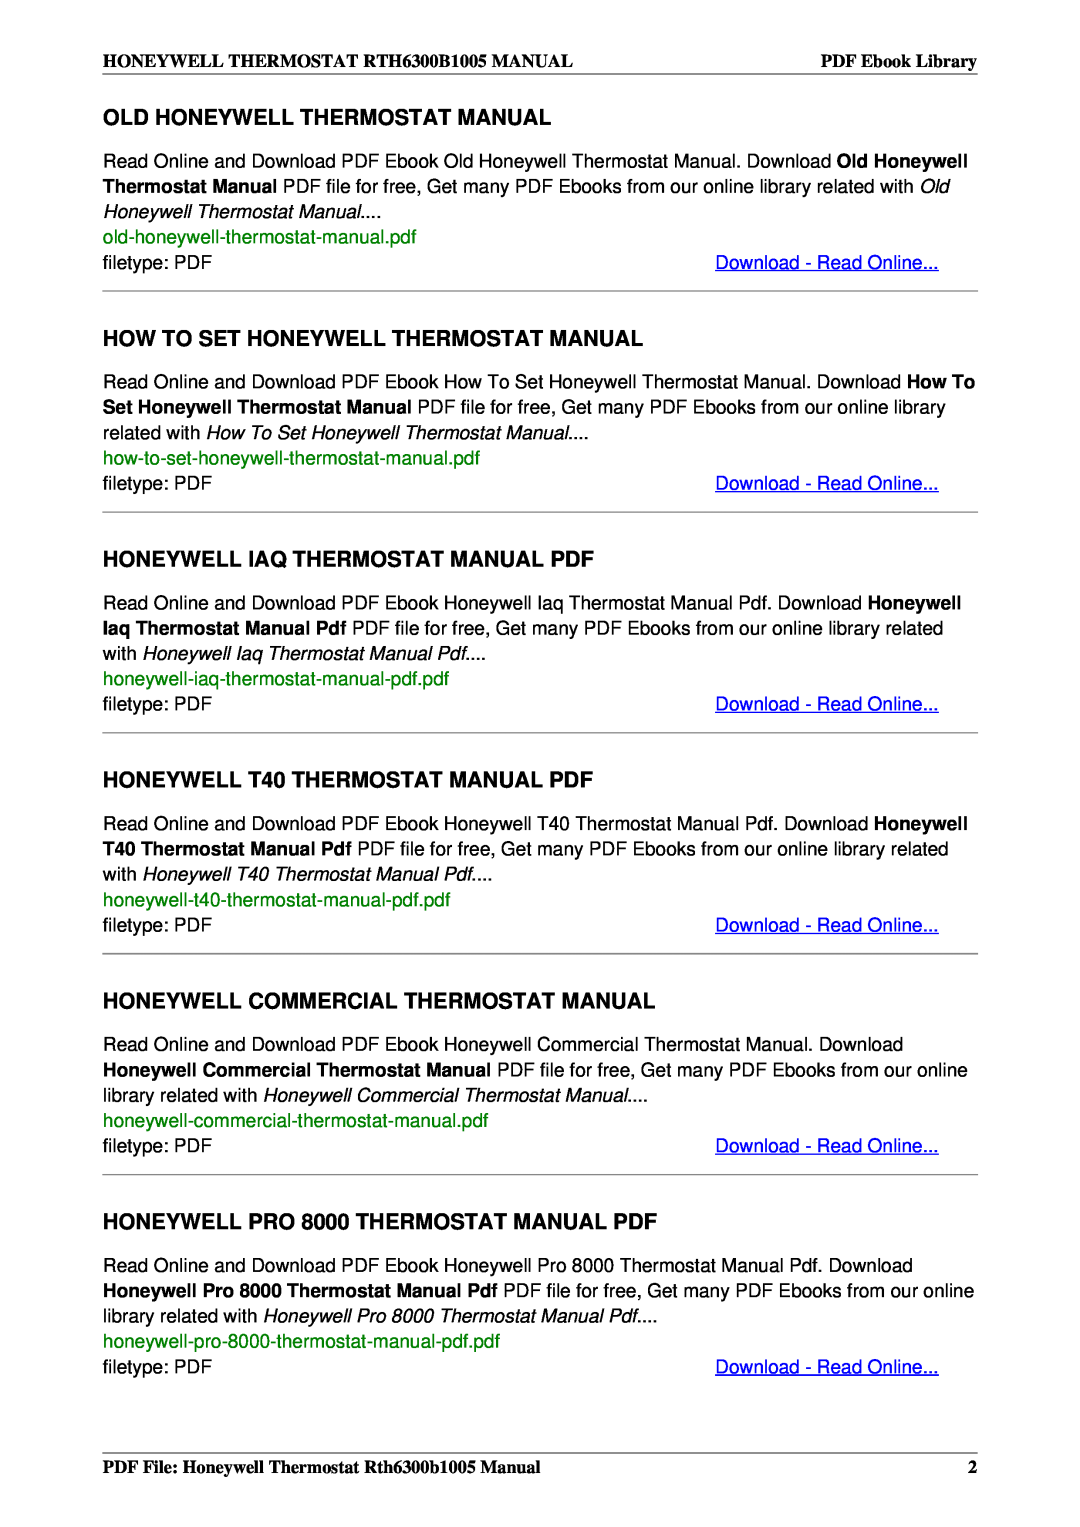 Honeywell RTH6300B1005 user manual Old Honeywell Thermostat Manual, How To Set Honeywell Thermostat Manual, filetype PDF 